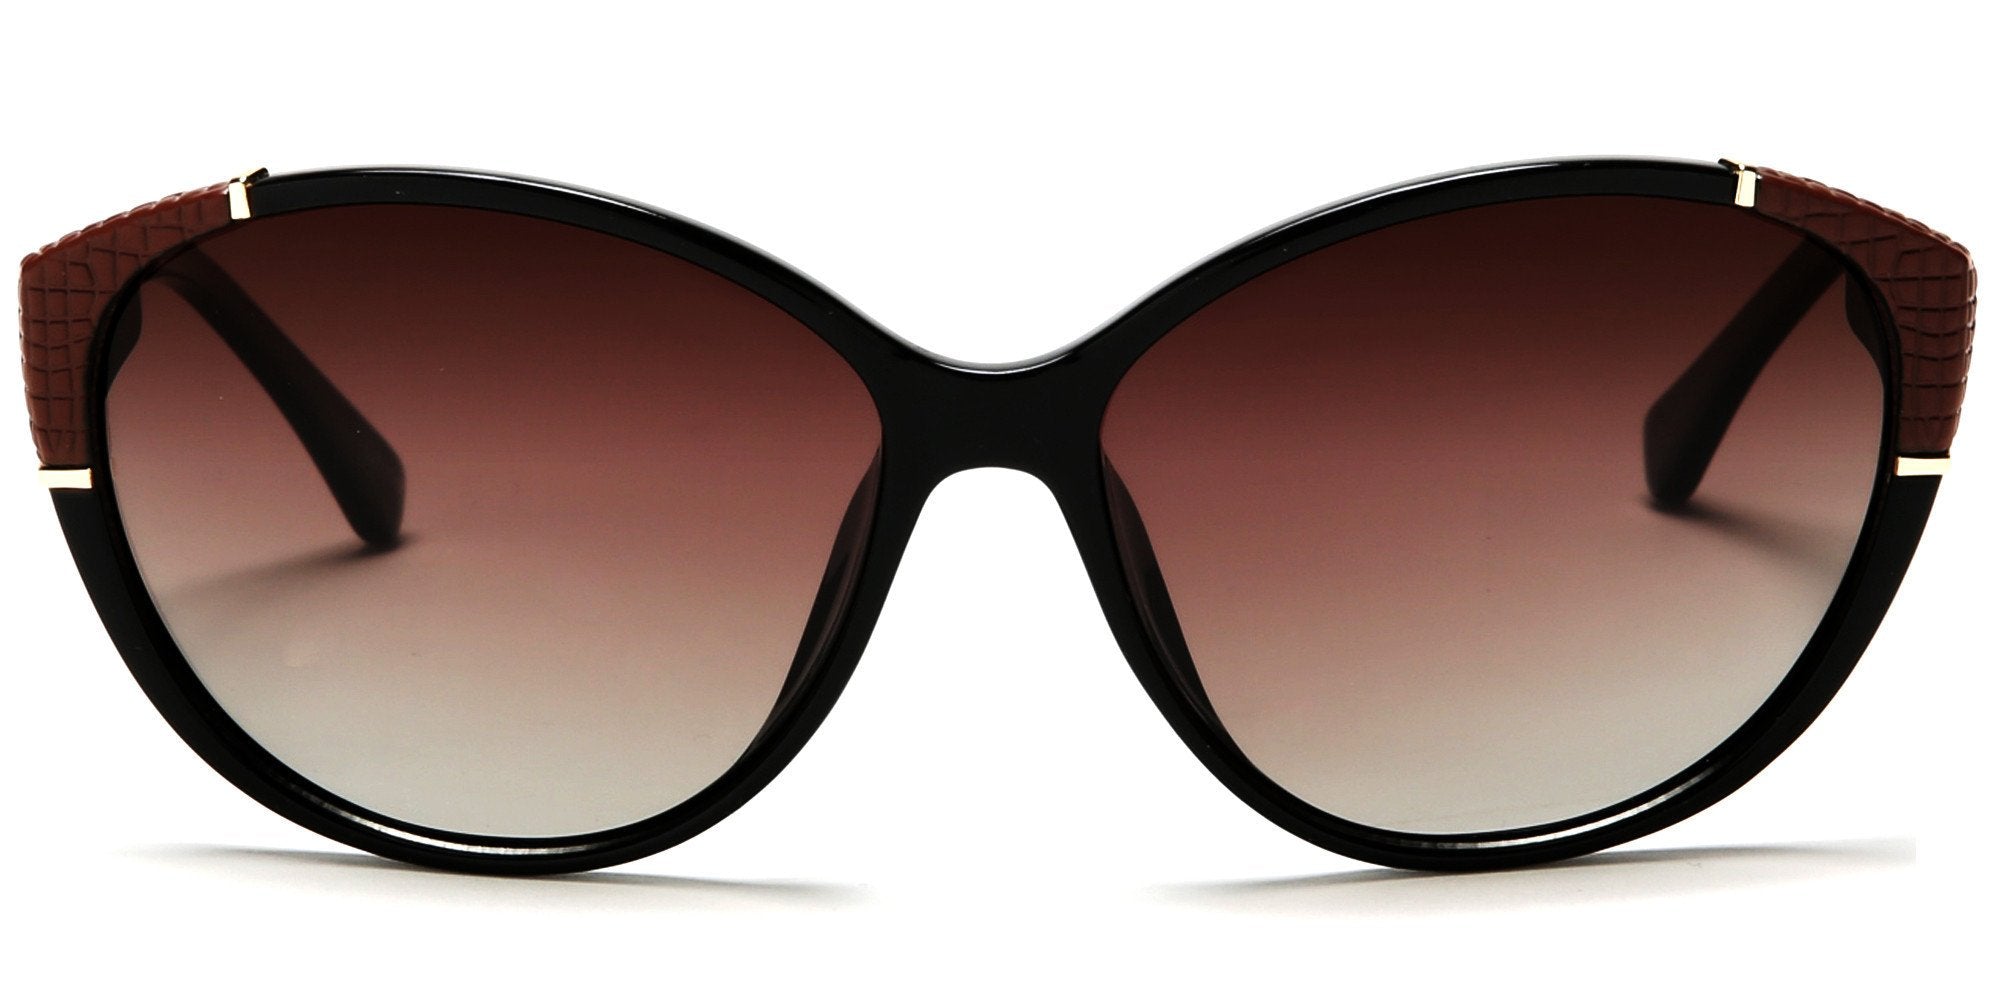 Samba Shades Polarized Marilyn's Cateye Fashion Sunglasses with Dark ...